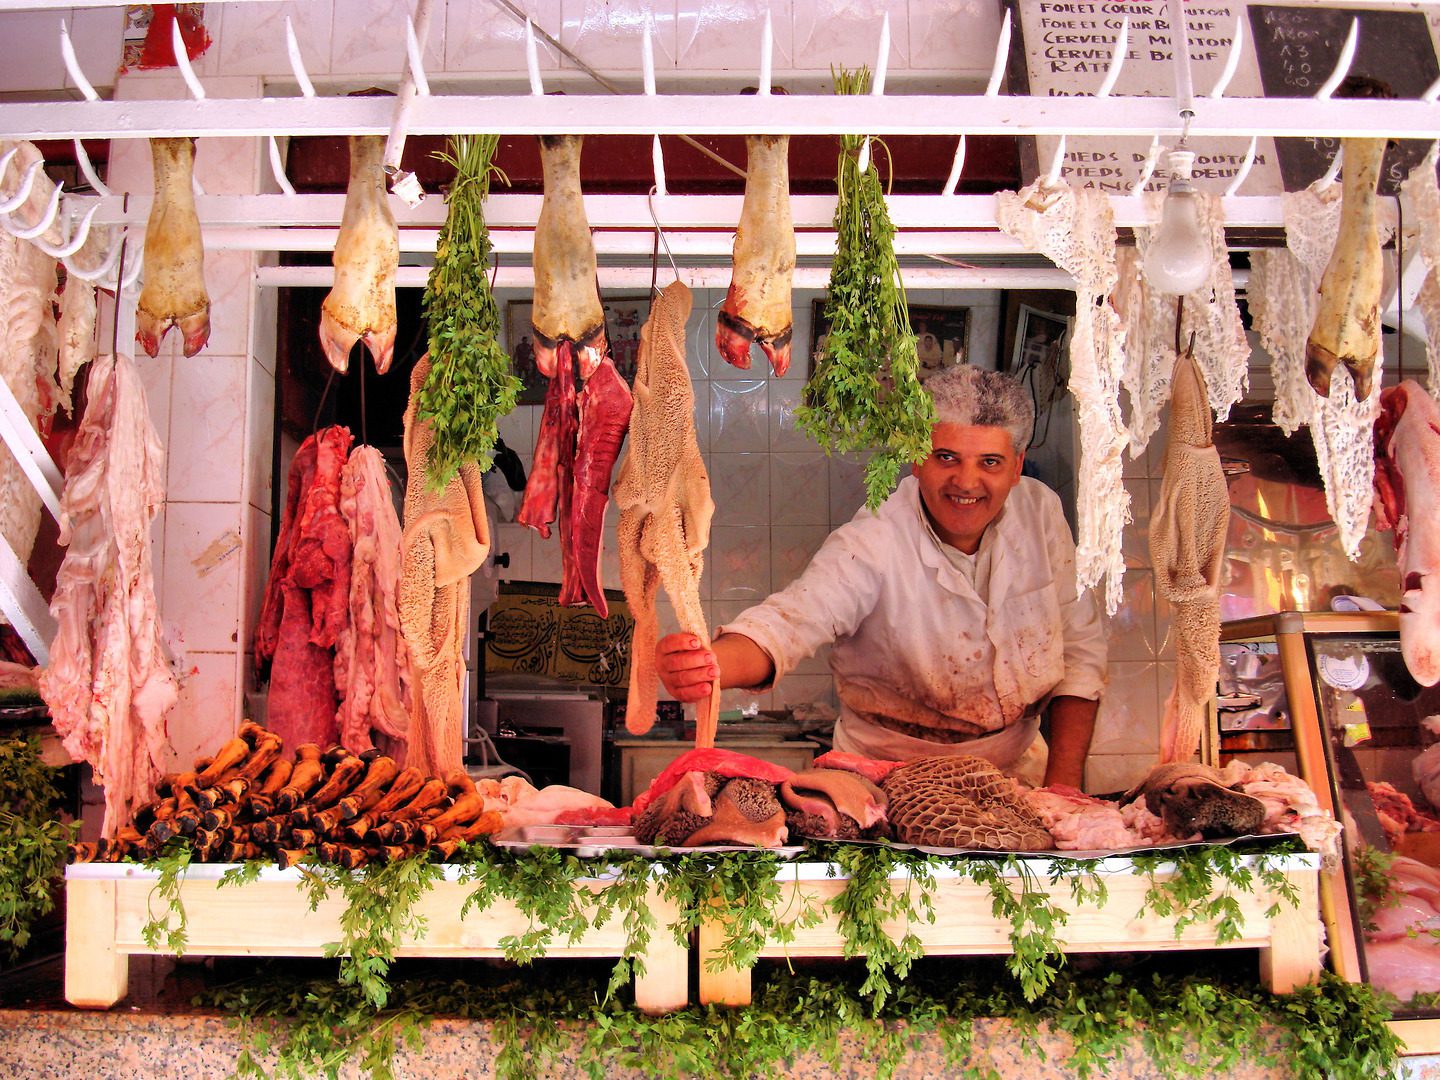 Morocco-Casablanca-Old-Medina-Butcher-Raw-Meat-Stand-1440x1080.jpg